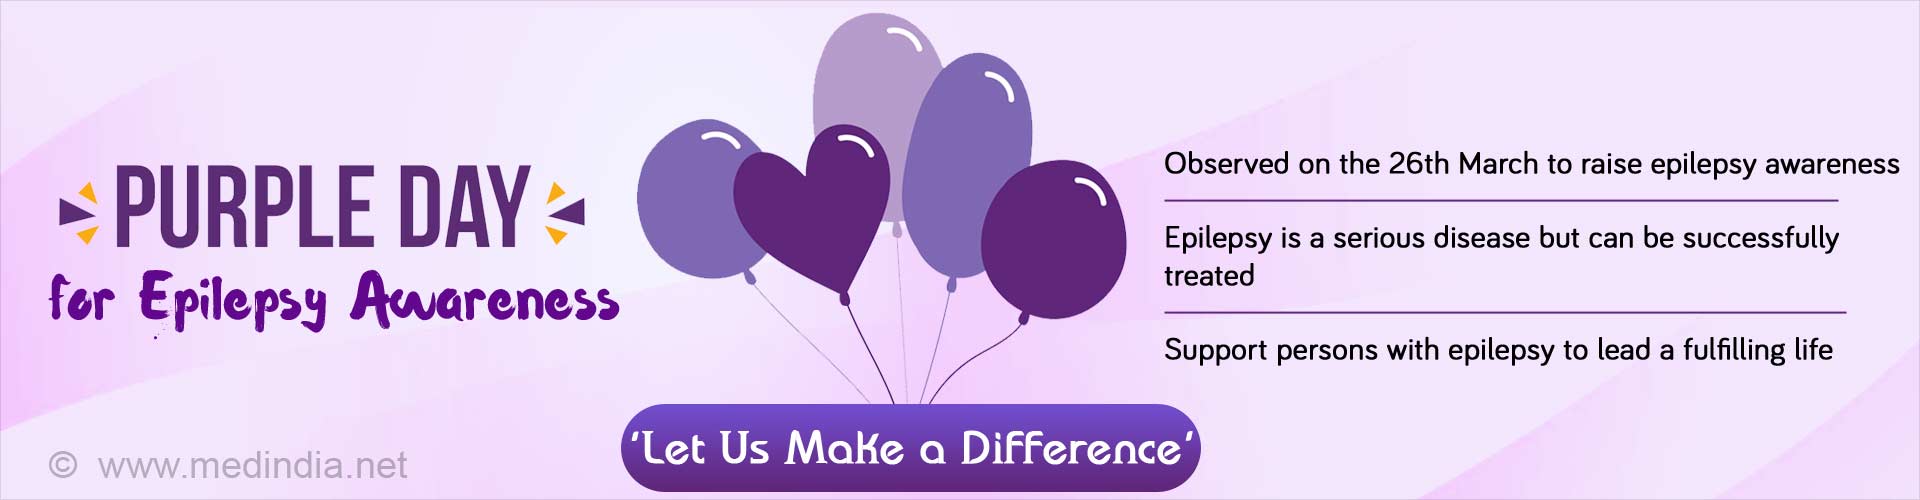 Purple Day Get Involved in Raising Epilepsy Awareness